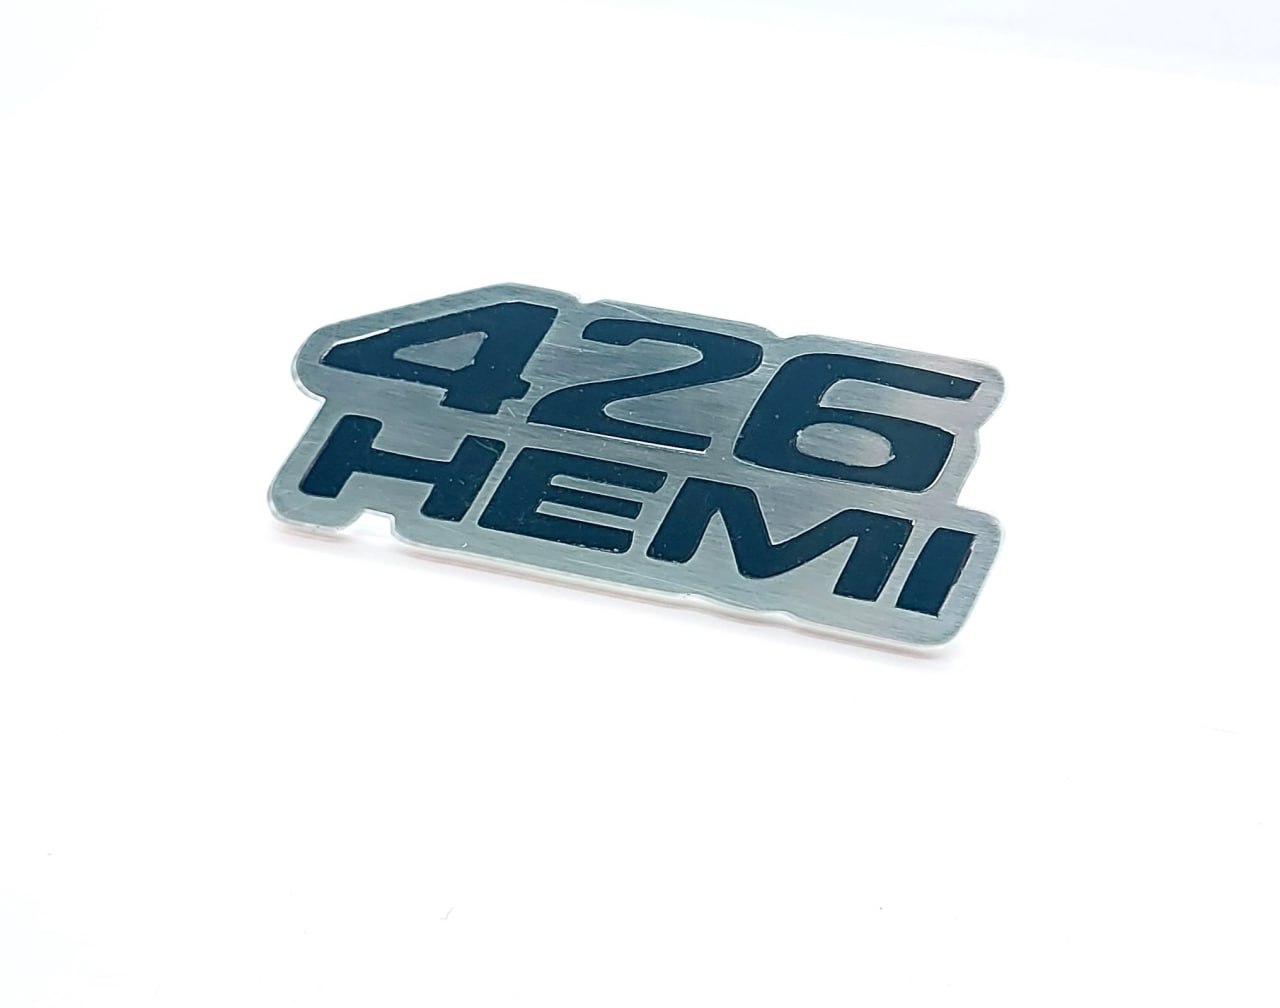 Chrysler 300C II Stainless Steel radiator grille emblem with 426 HEMI logo - decoinfabric